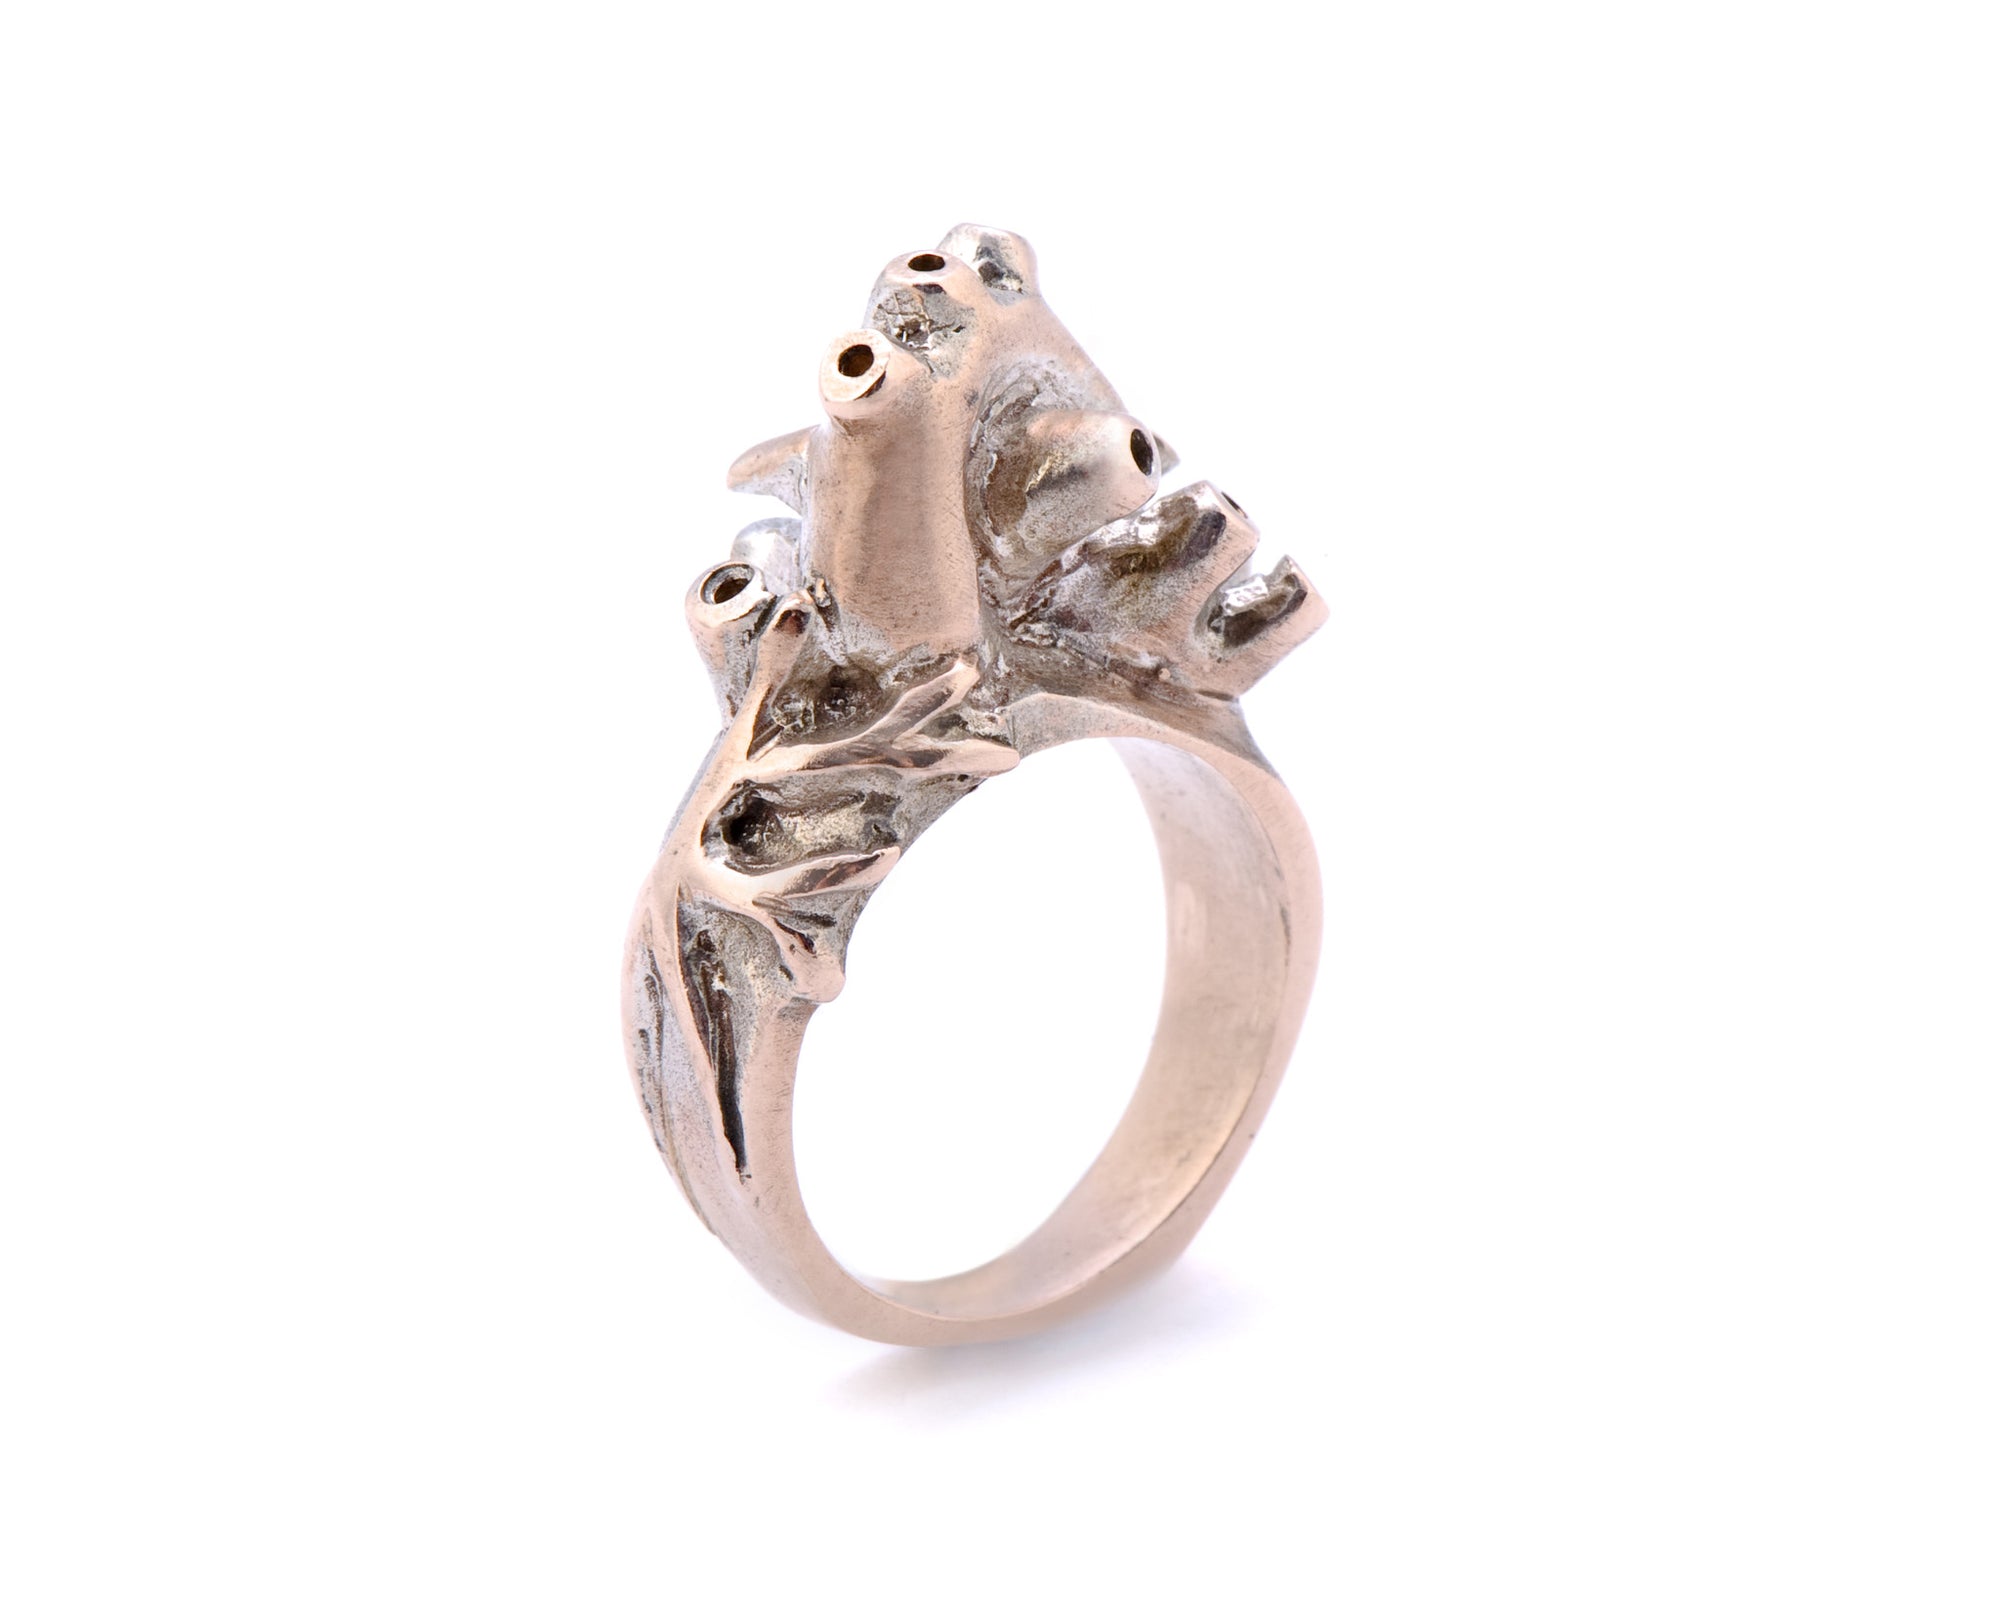 Carnation Pink Silver Vasculature Ring